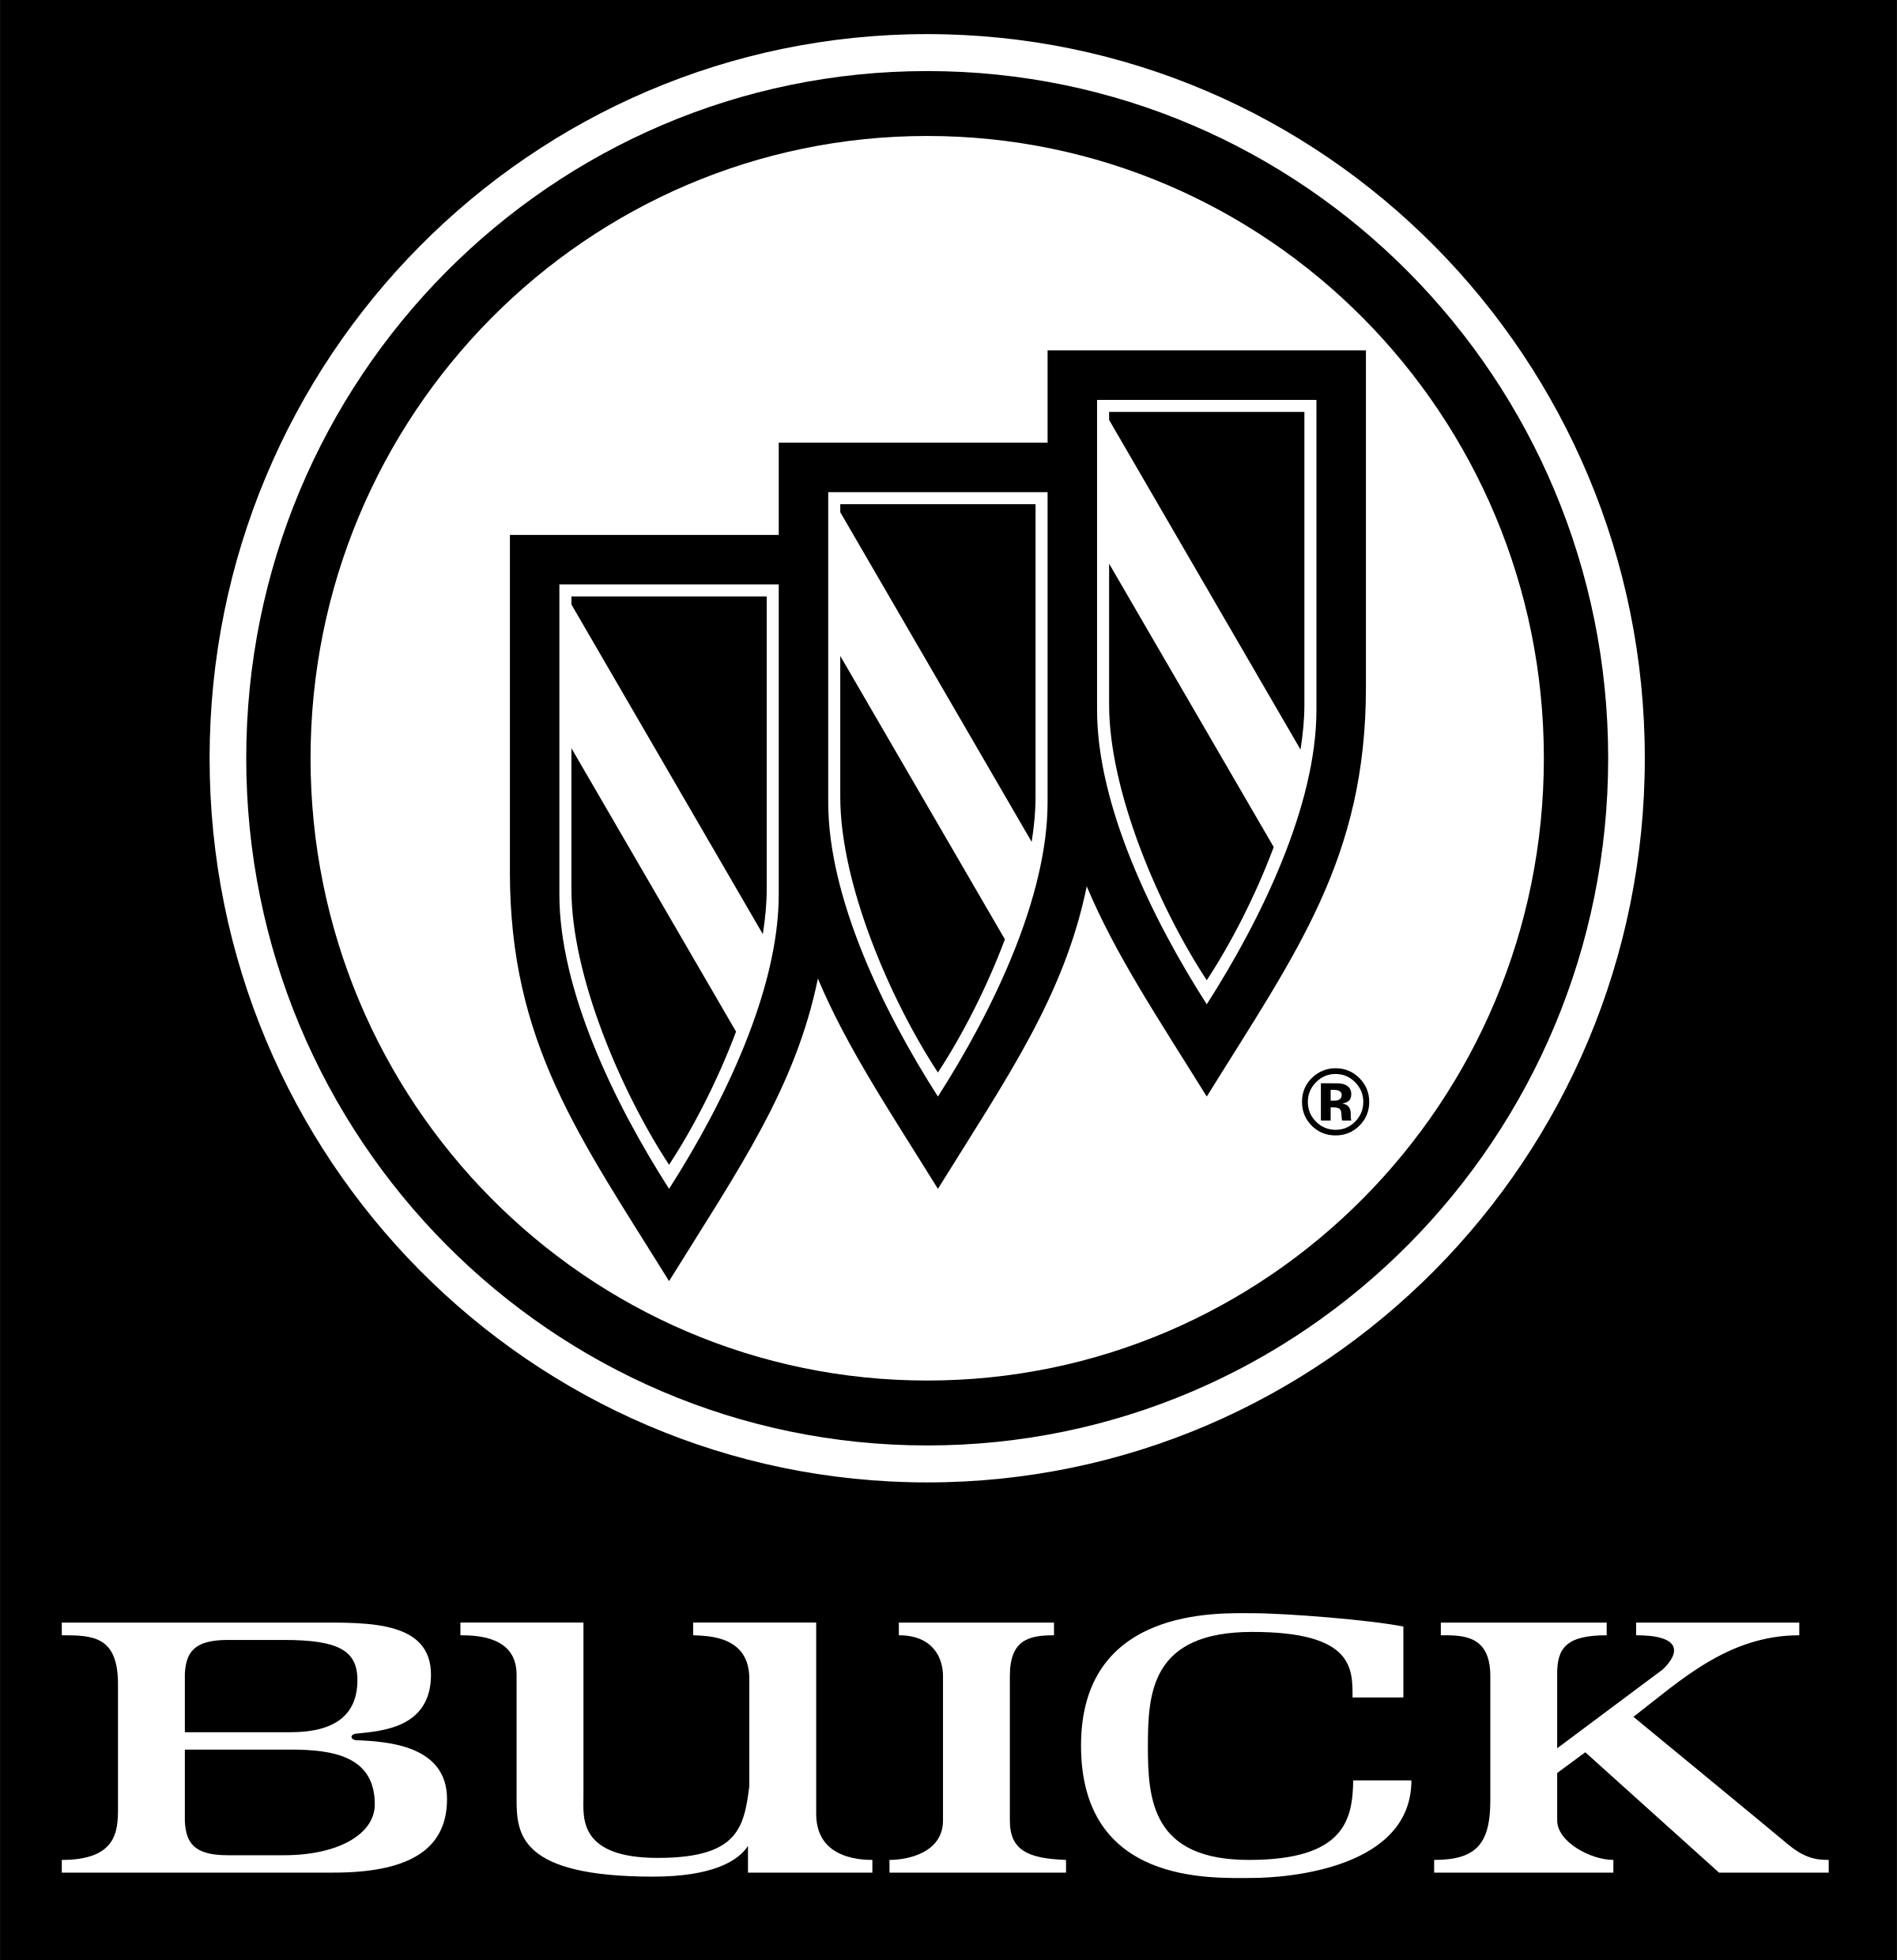 Buik Logo - Buick Logo PNG Transparent & SVG Vector - Freebie Supply